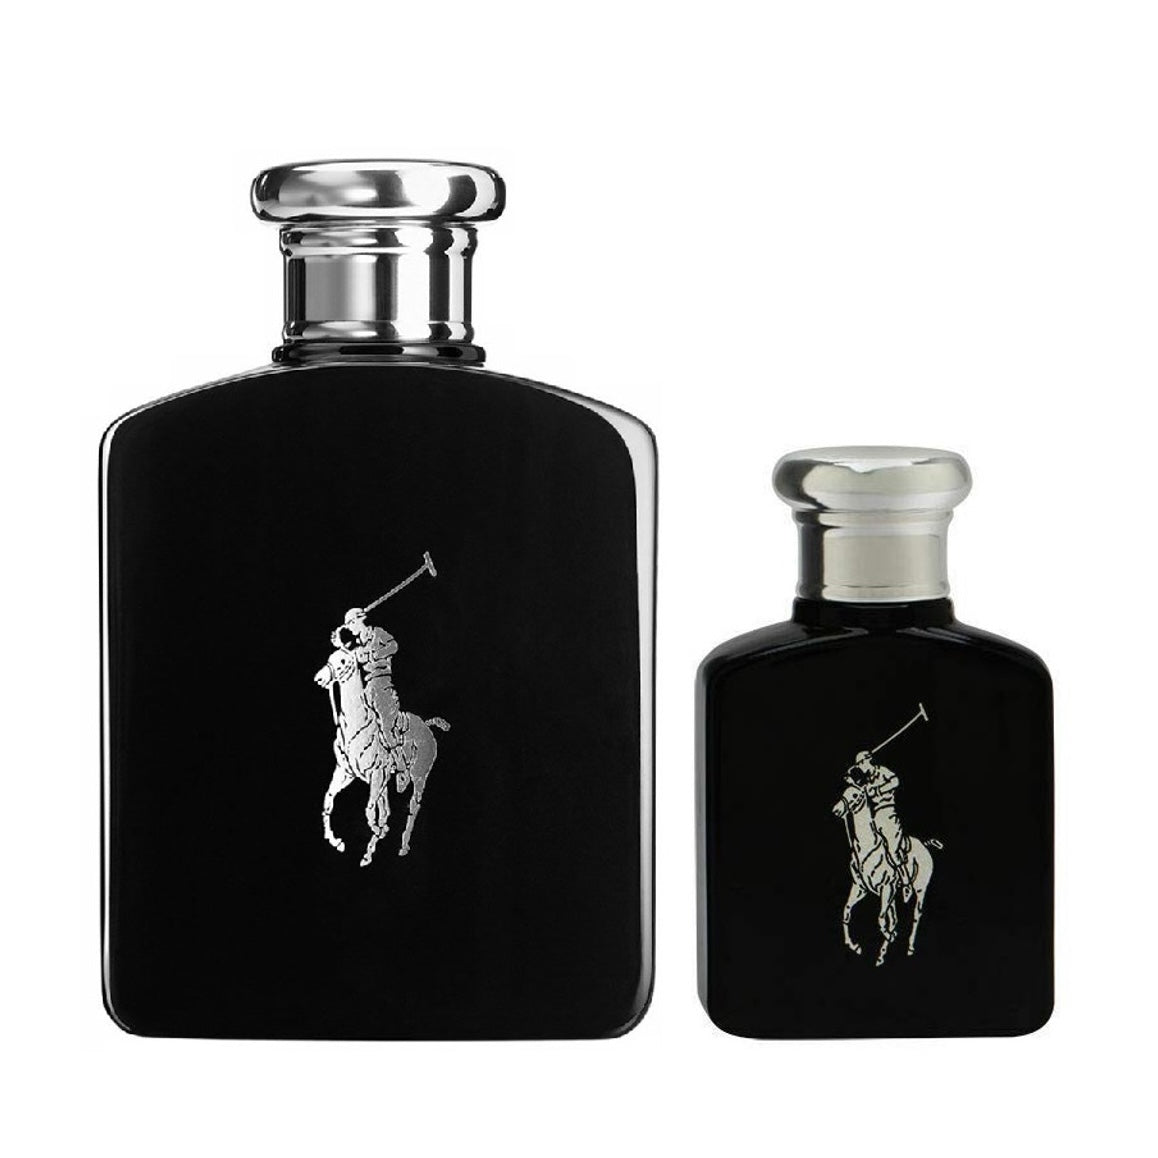 Ralph Lauren Polo Black EDT Travel Set | My Perfume Shop Australia